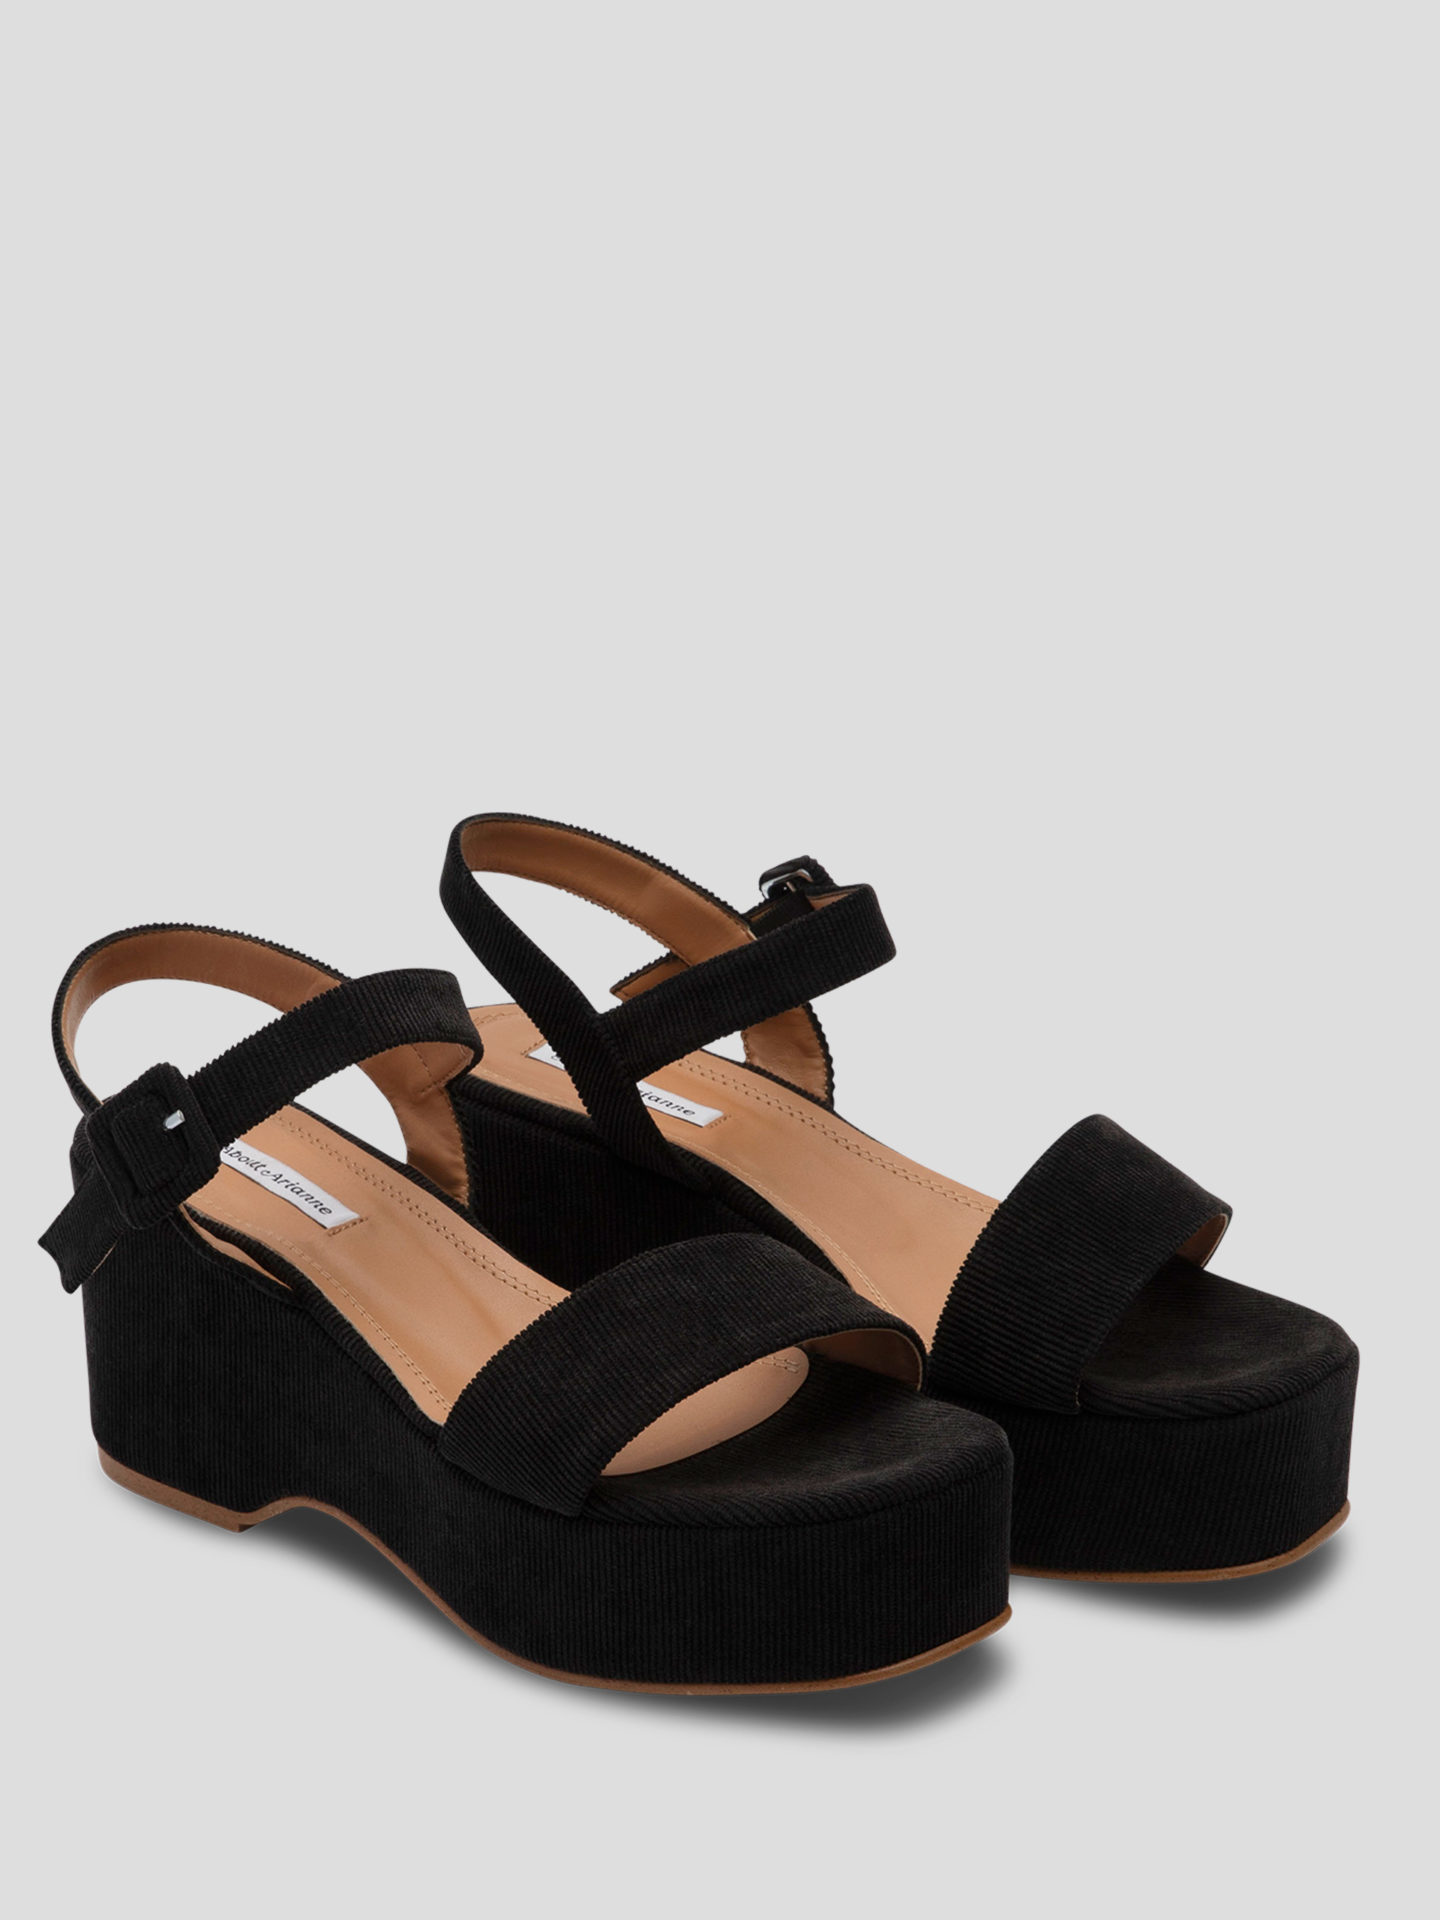 pandilla prometedor Alicia 14 sandalias con plataforma para un estilo de altura | Moda, Shopping | S  Moda EL PAÍS